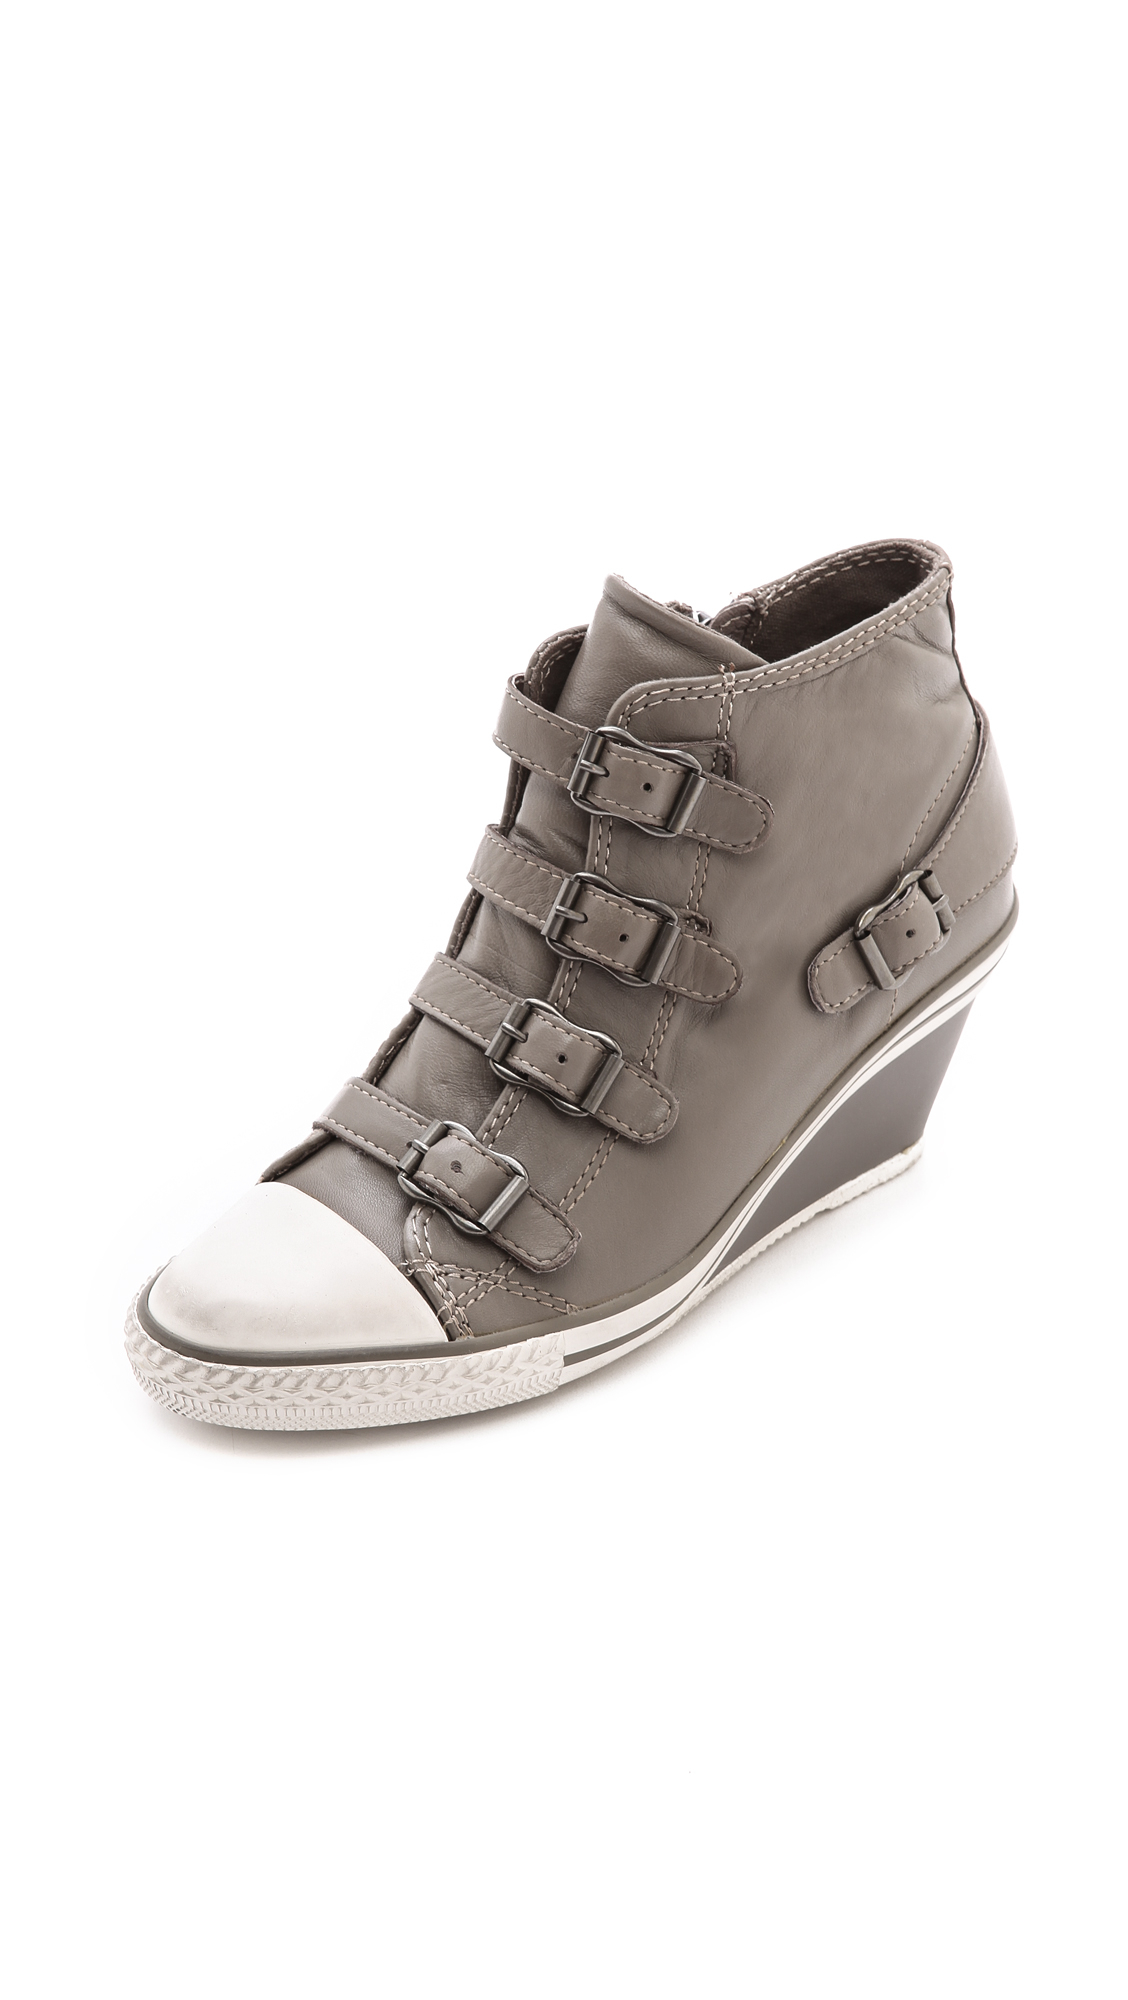 Ash Genial Low Wedge Sneakers - Perkish in Gray - Lyst